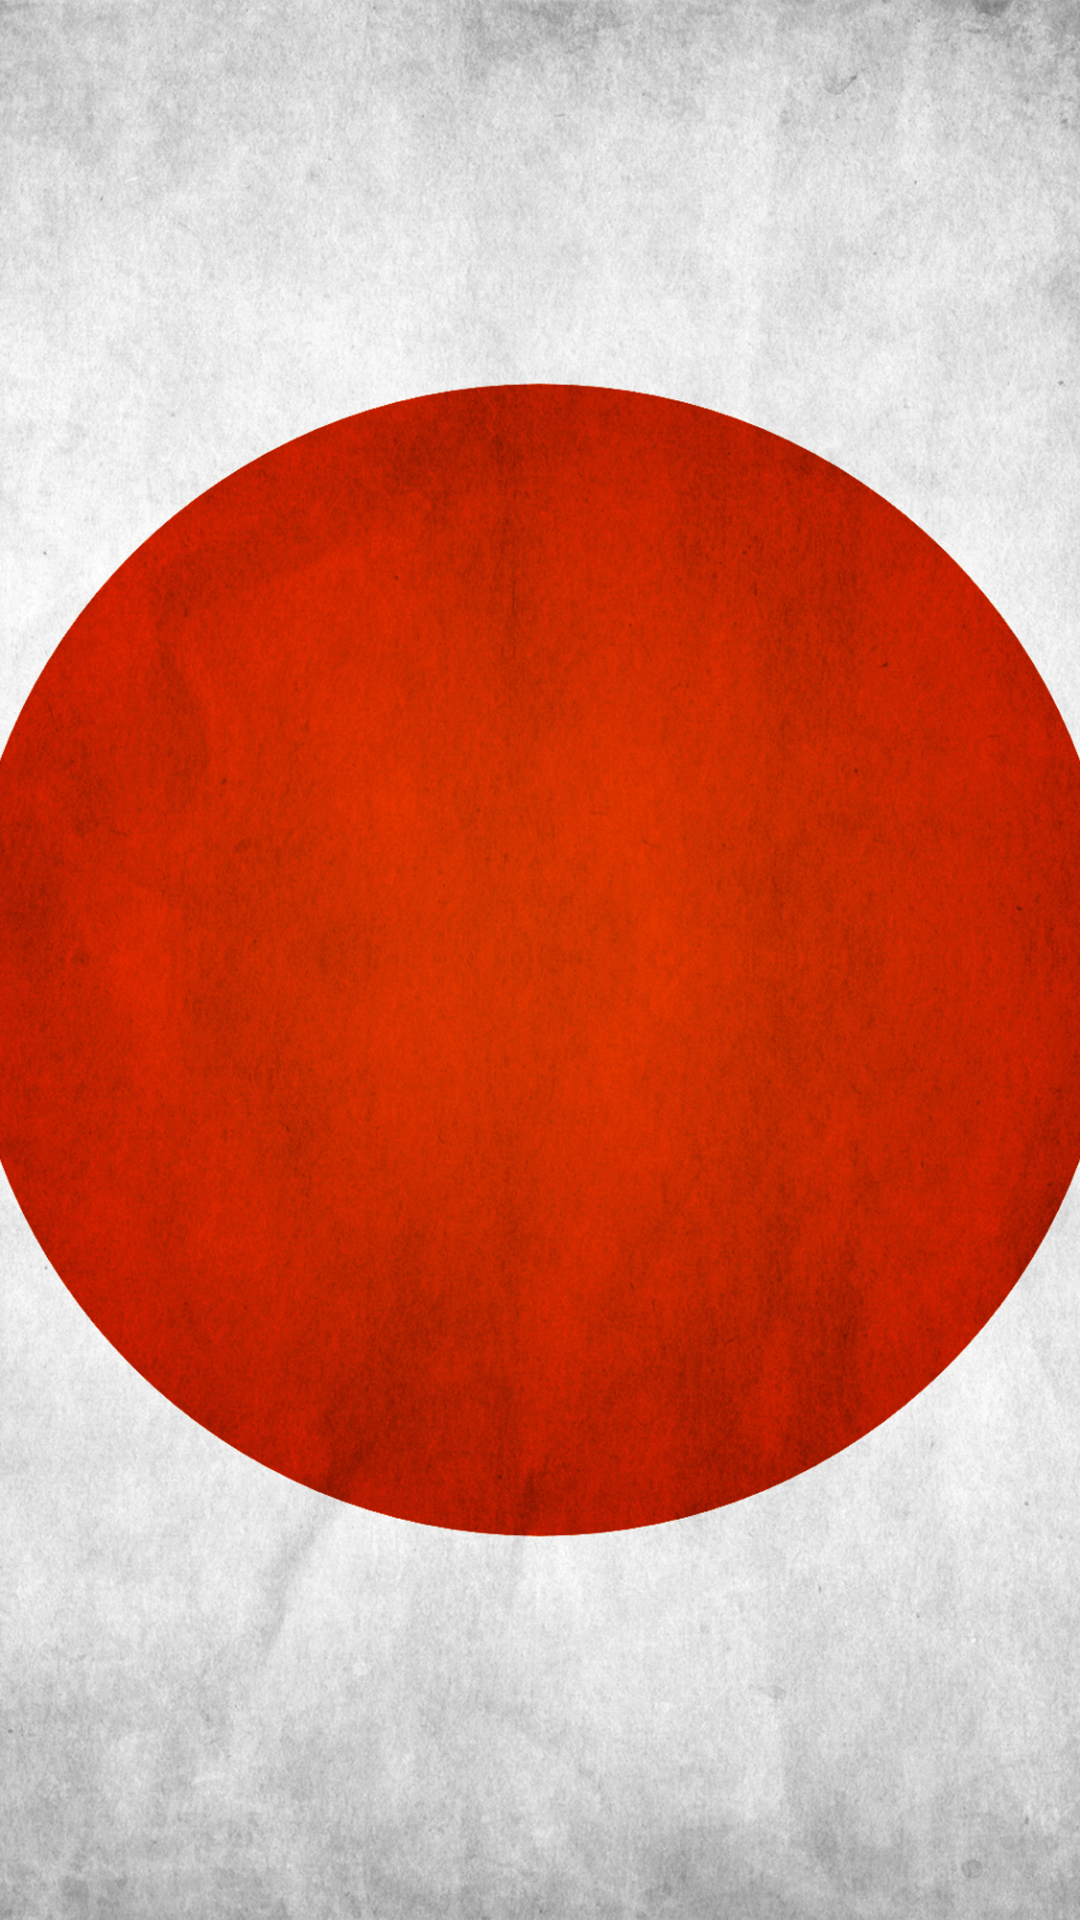 japanese flag, misc, flag of japan, flag, flags